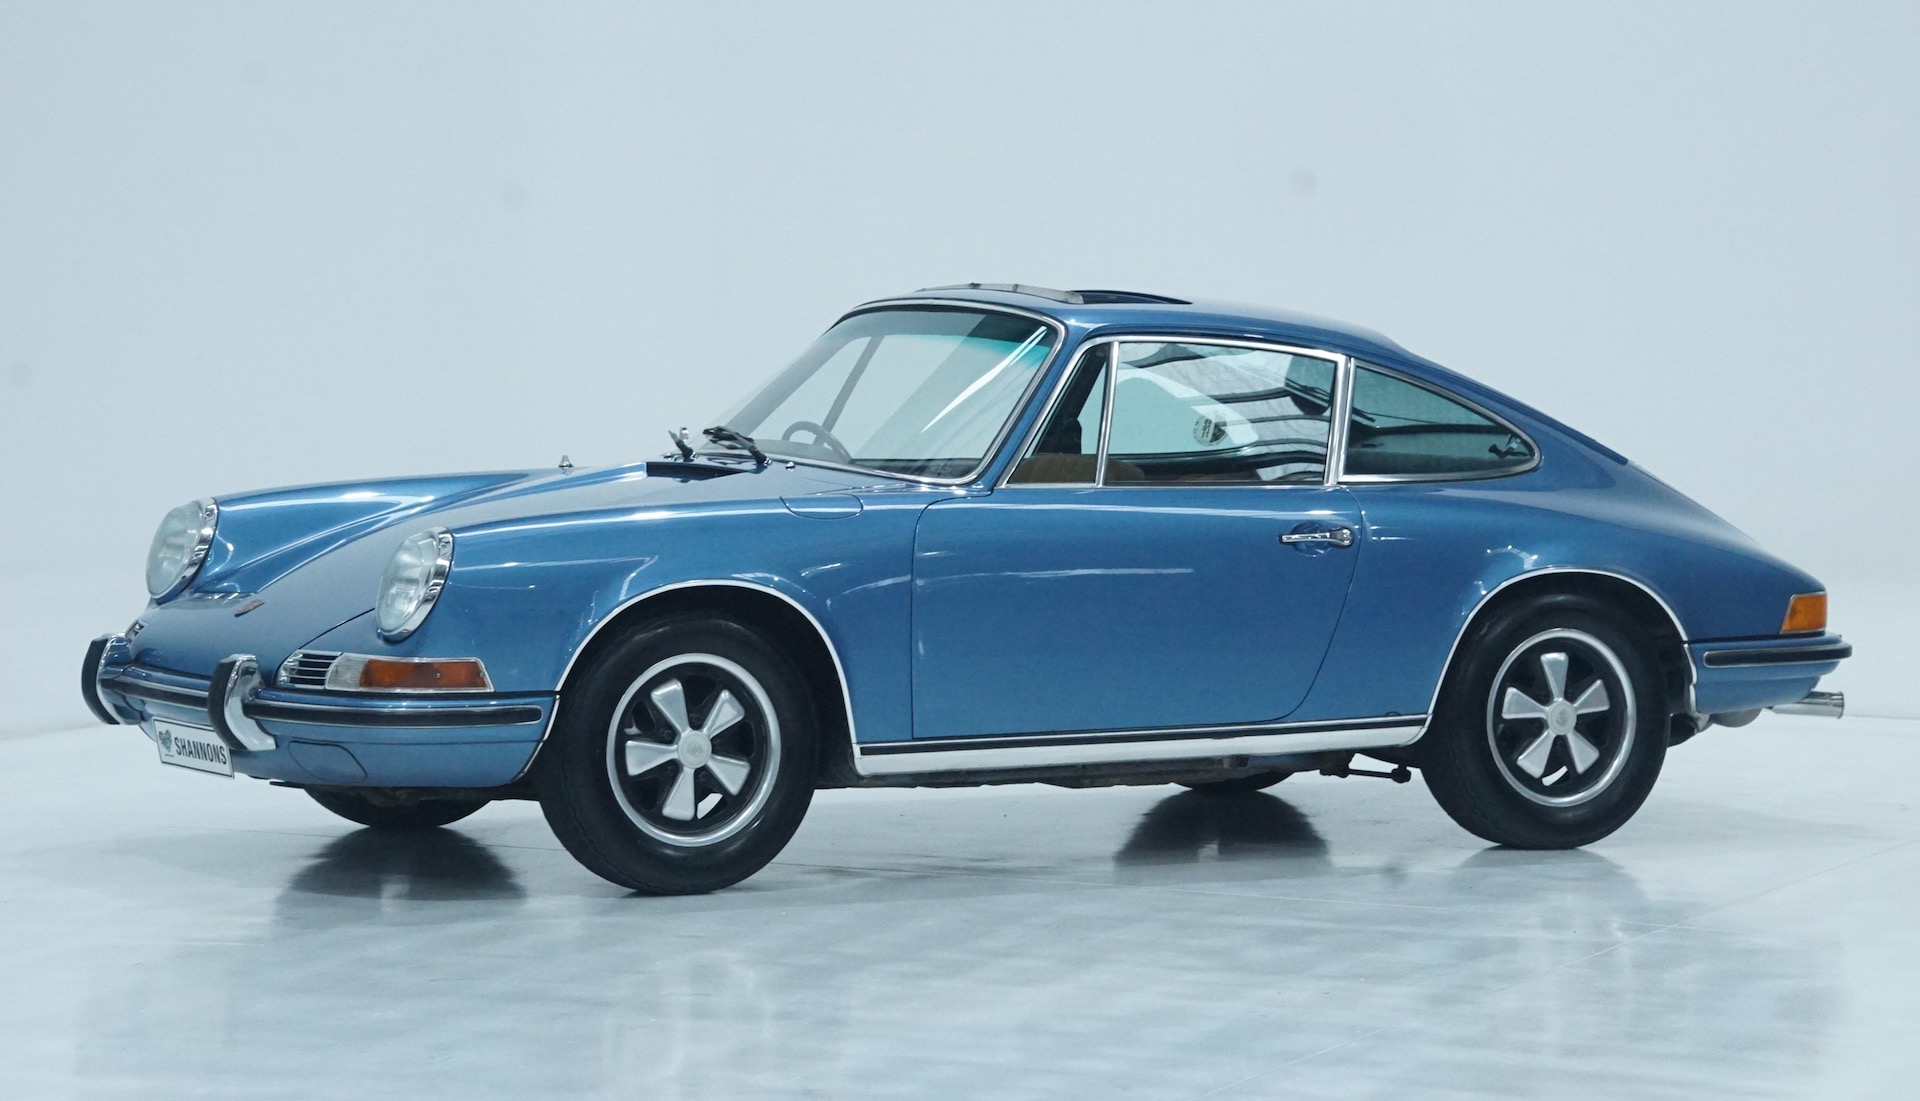 For Sale: Original 1972 Porsche 911E 2.4, owned by 99yo enthusiast